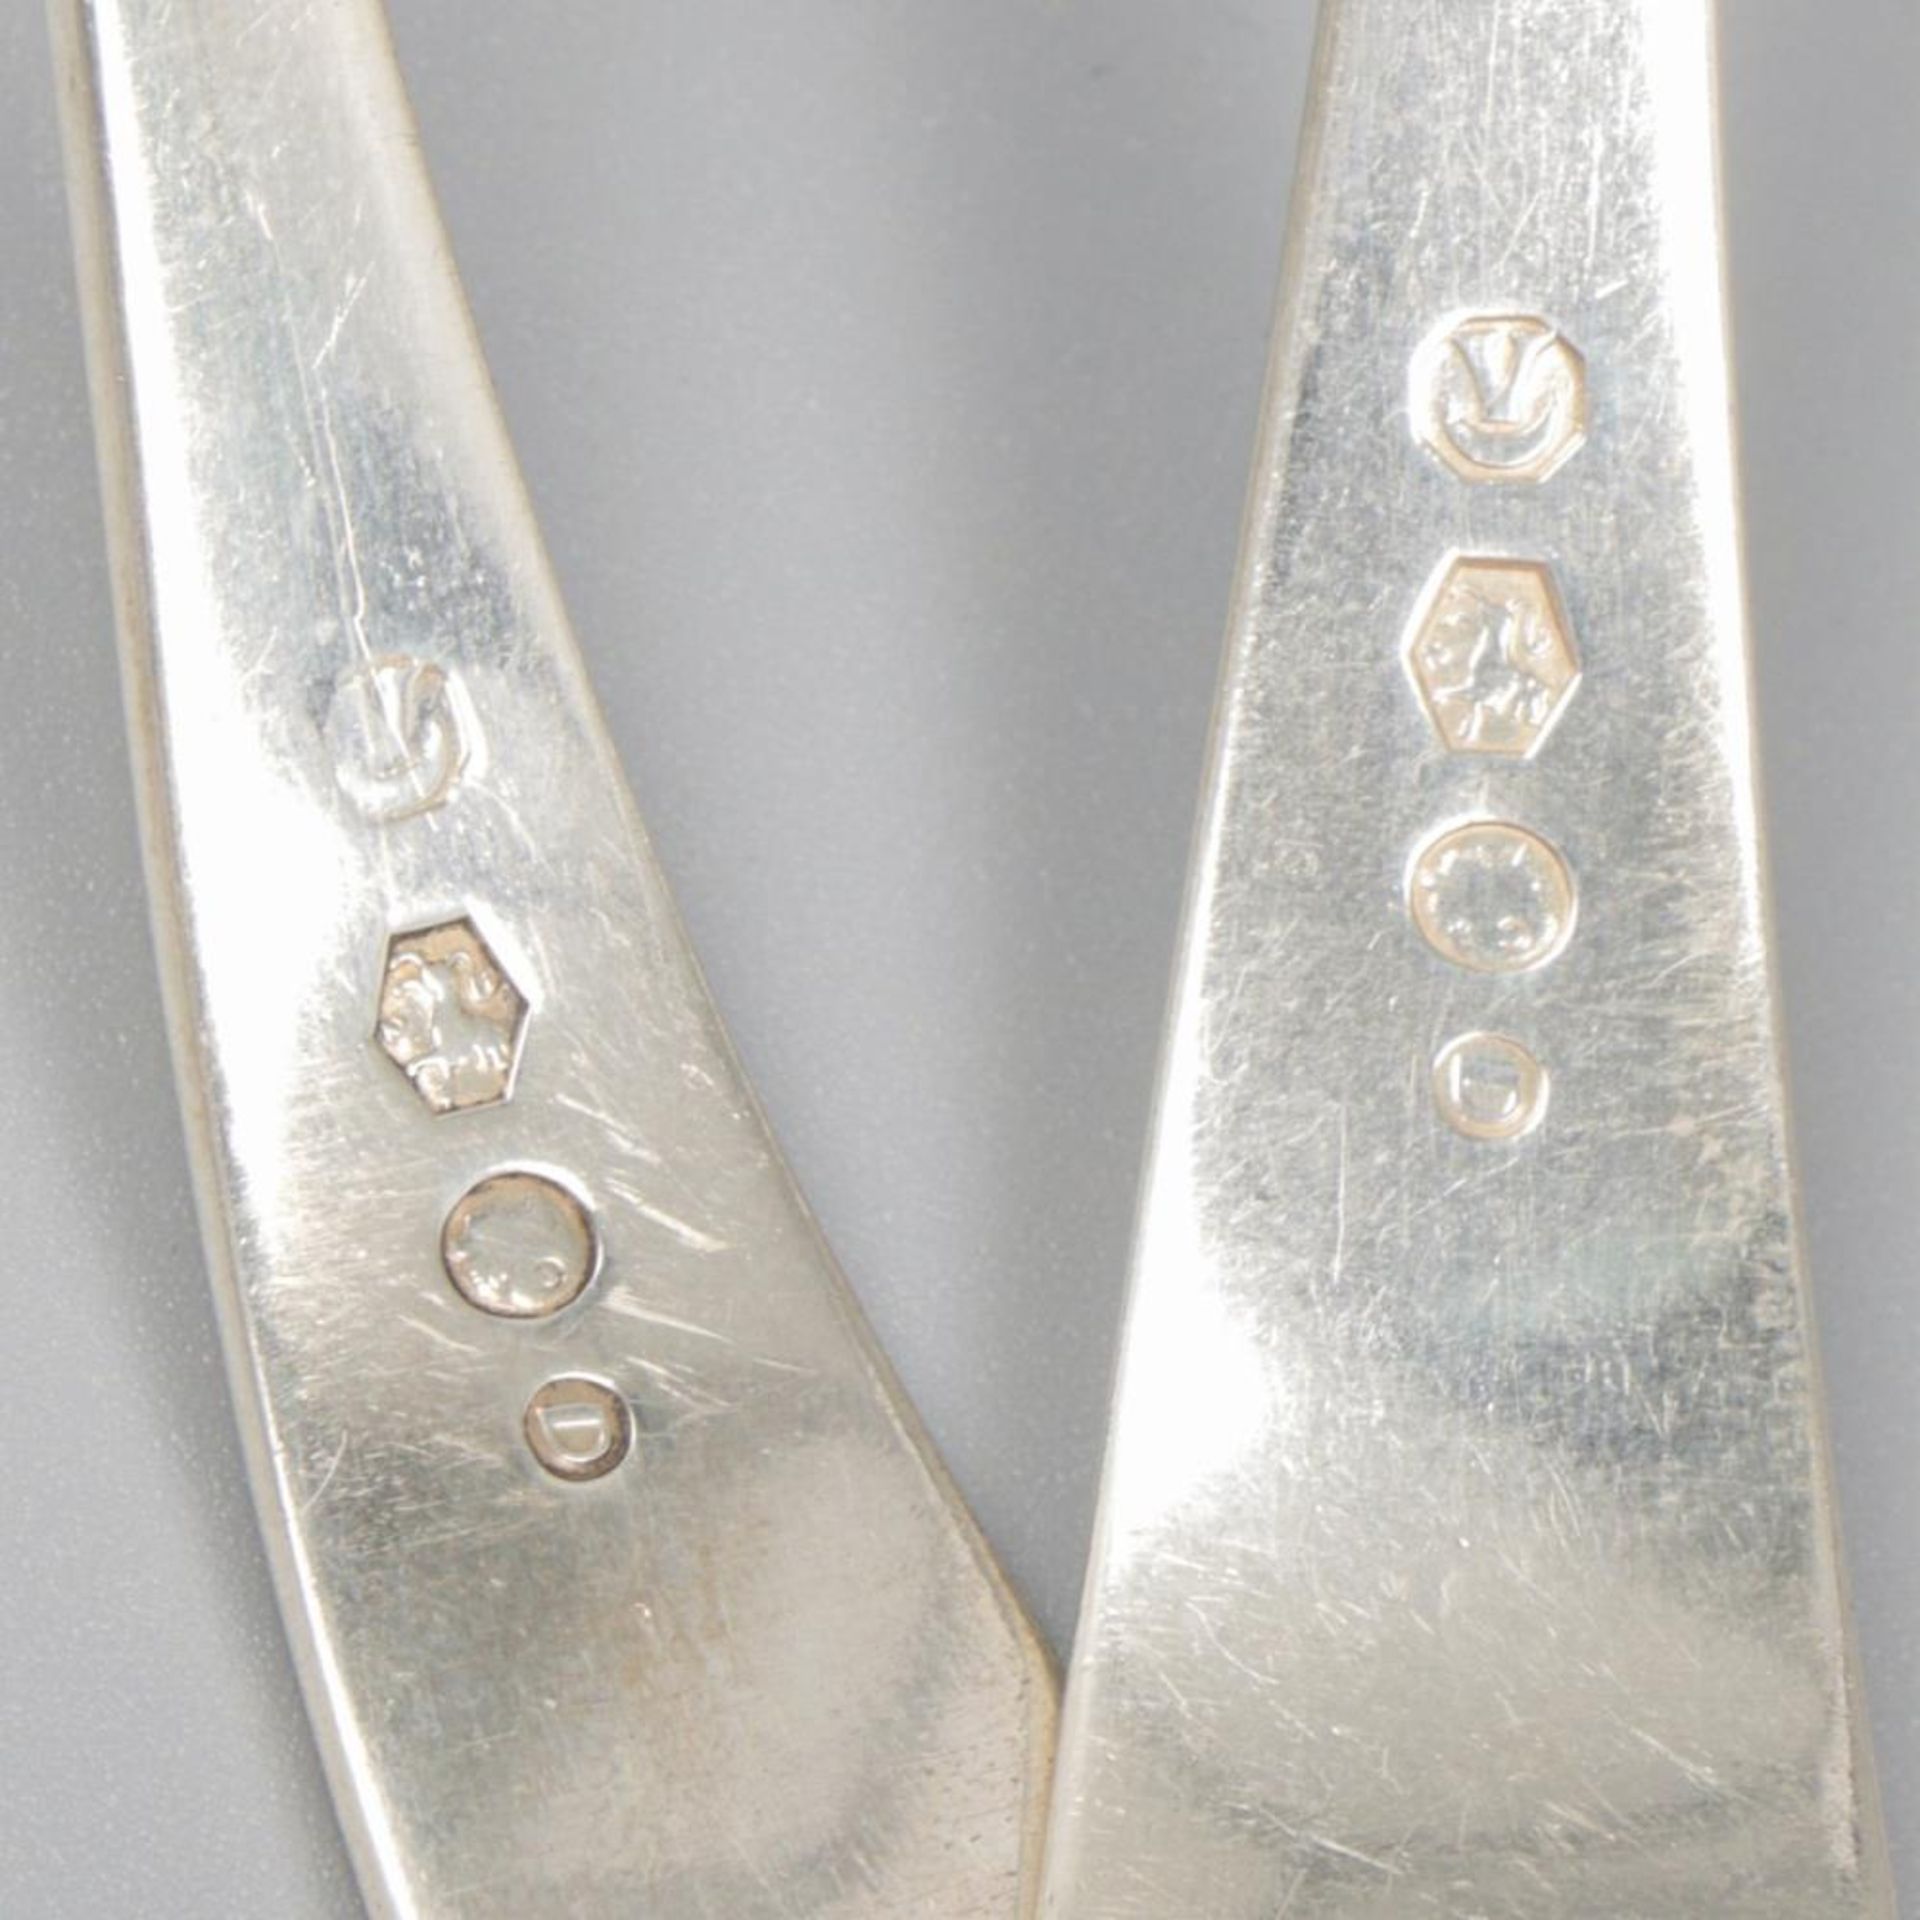 2-piece set of sauce spoons "Hollands Puntfilet" silver. - Image 4 of 5